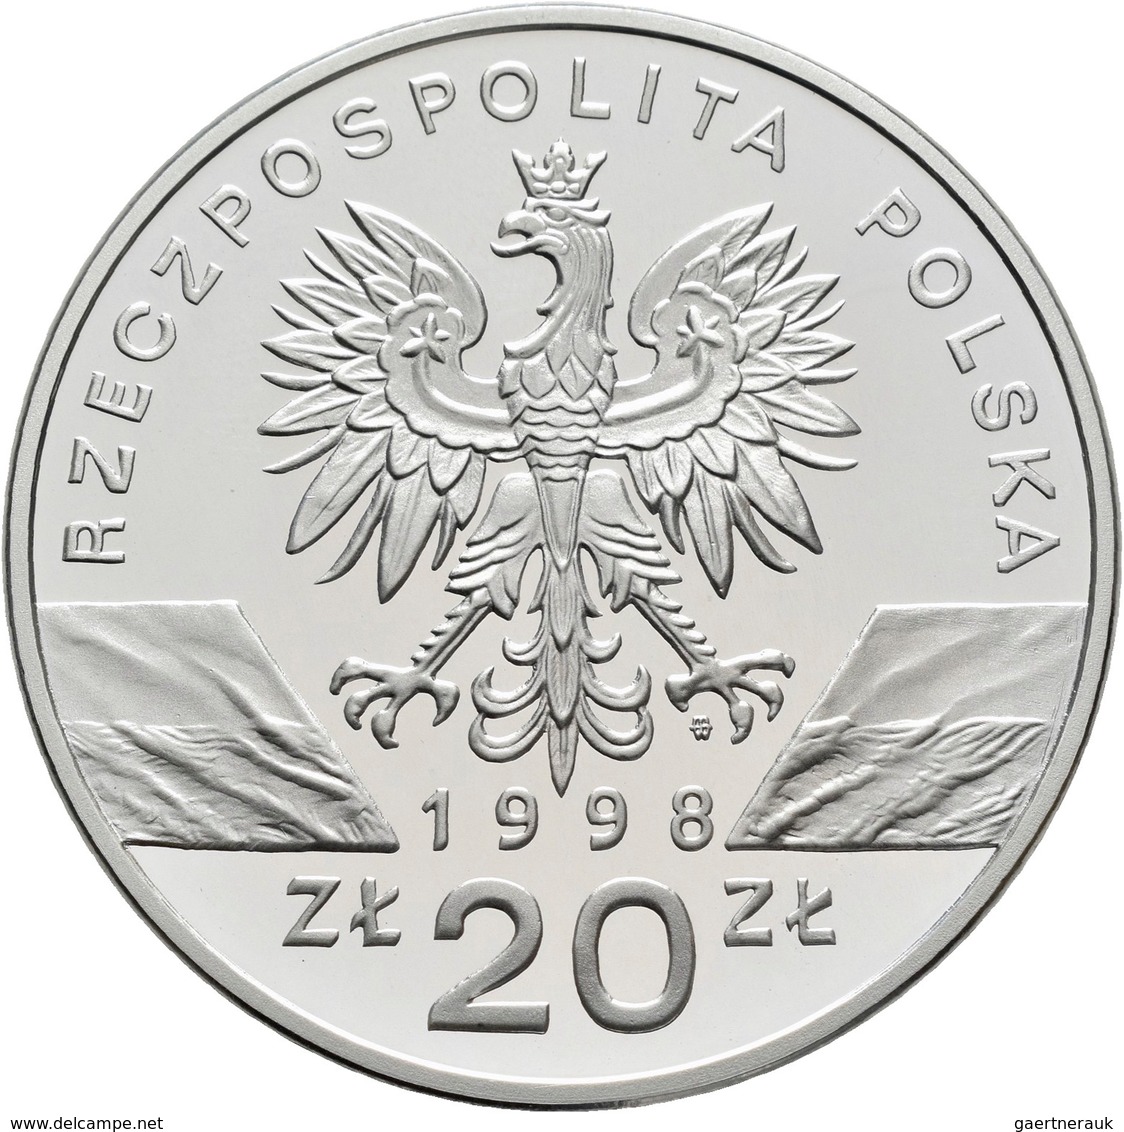 Polen: 20 Zlotych 1998, Kreuzkröte / Ropucha Paskowka / Bufo Calamita, KM# Y 343. Polierte Platte. - Polen